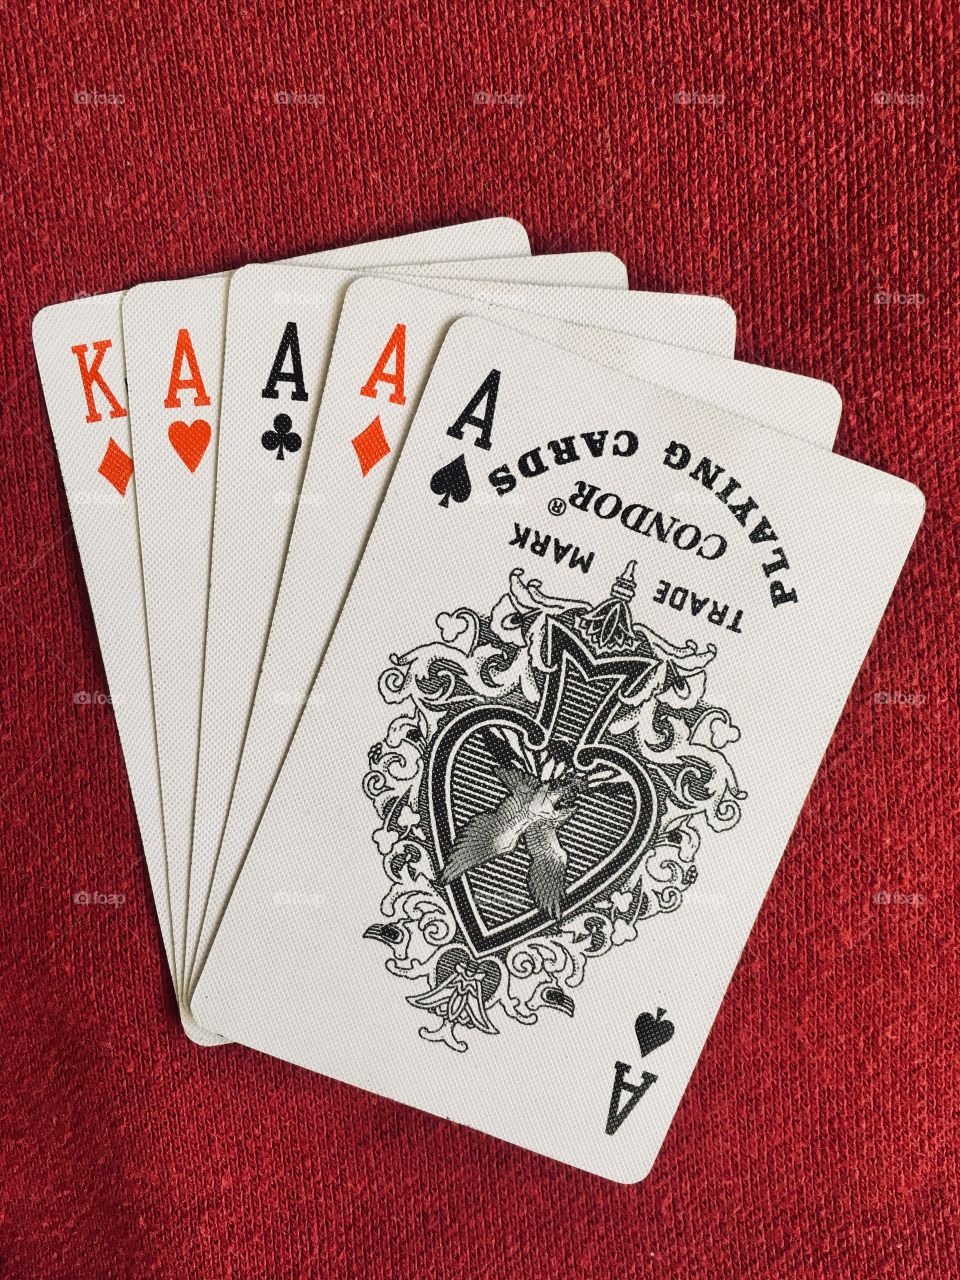 Poker hand- Four of a kind